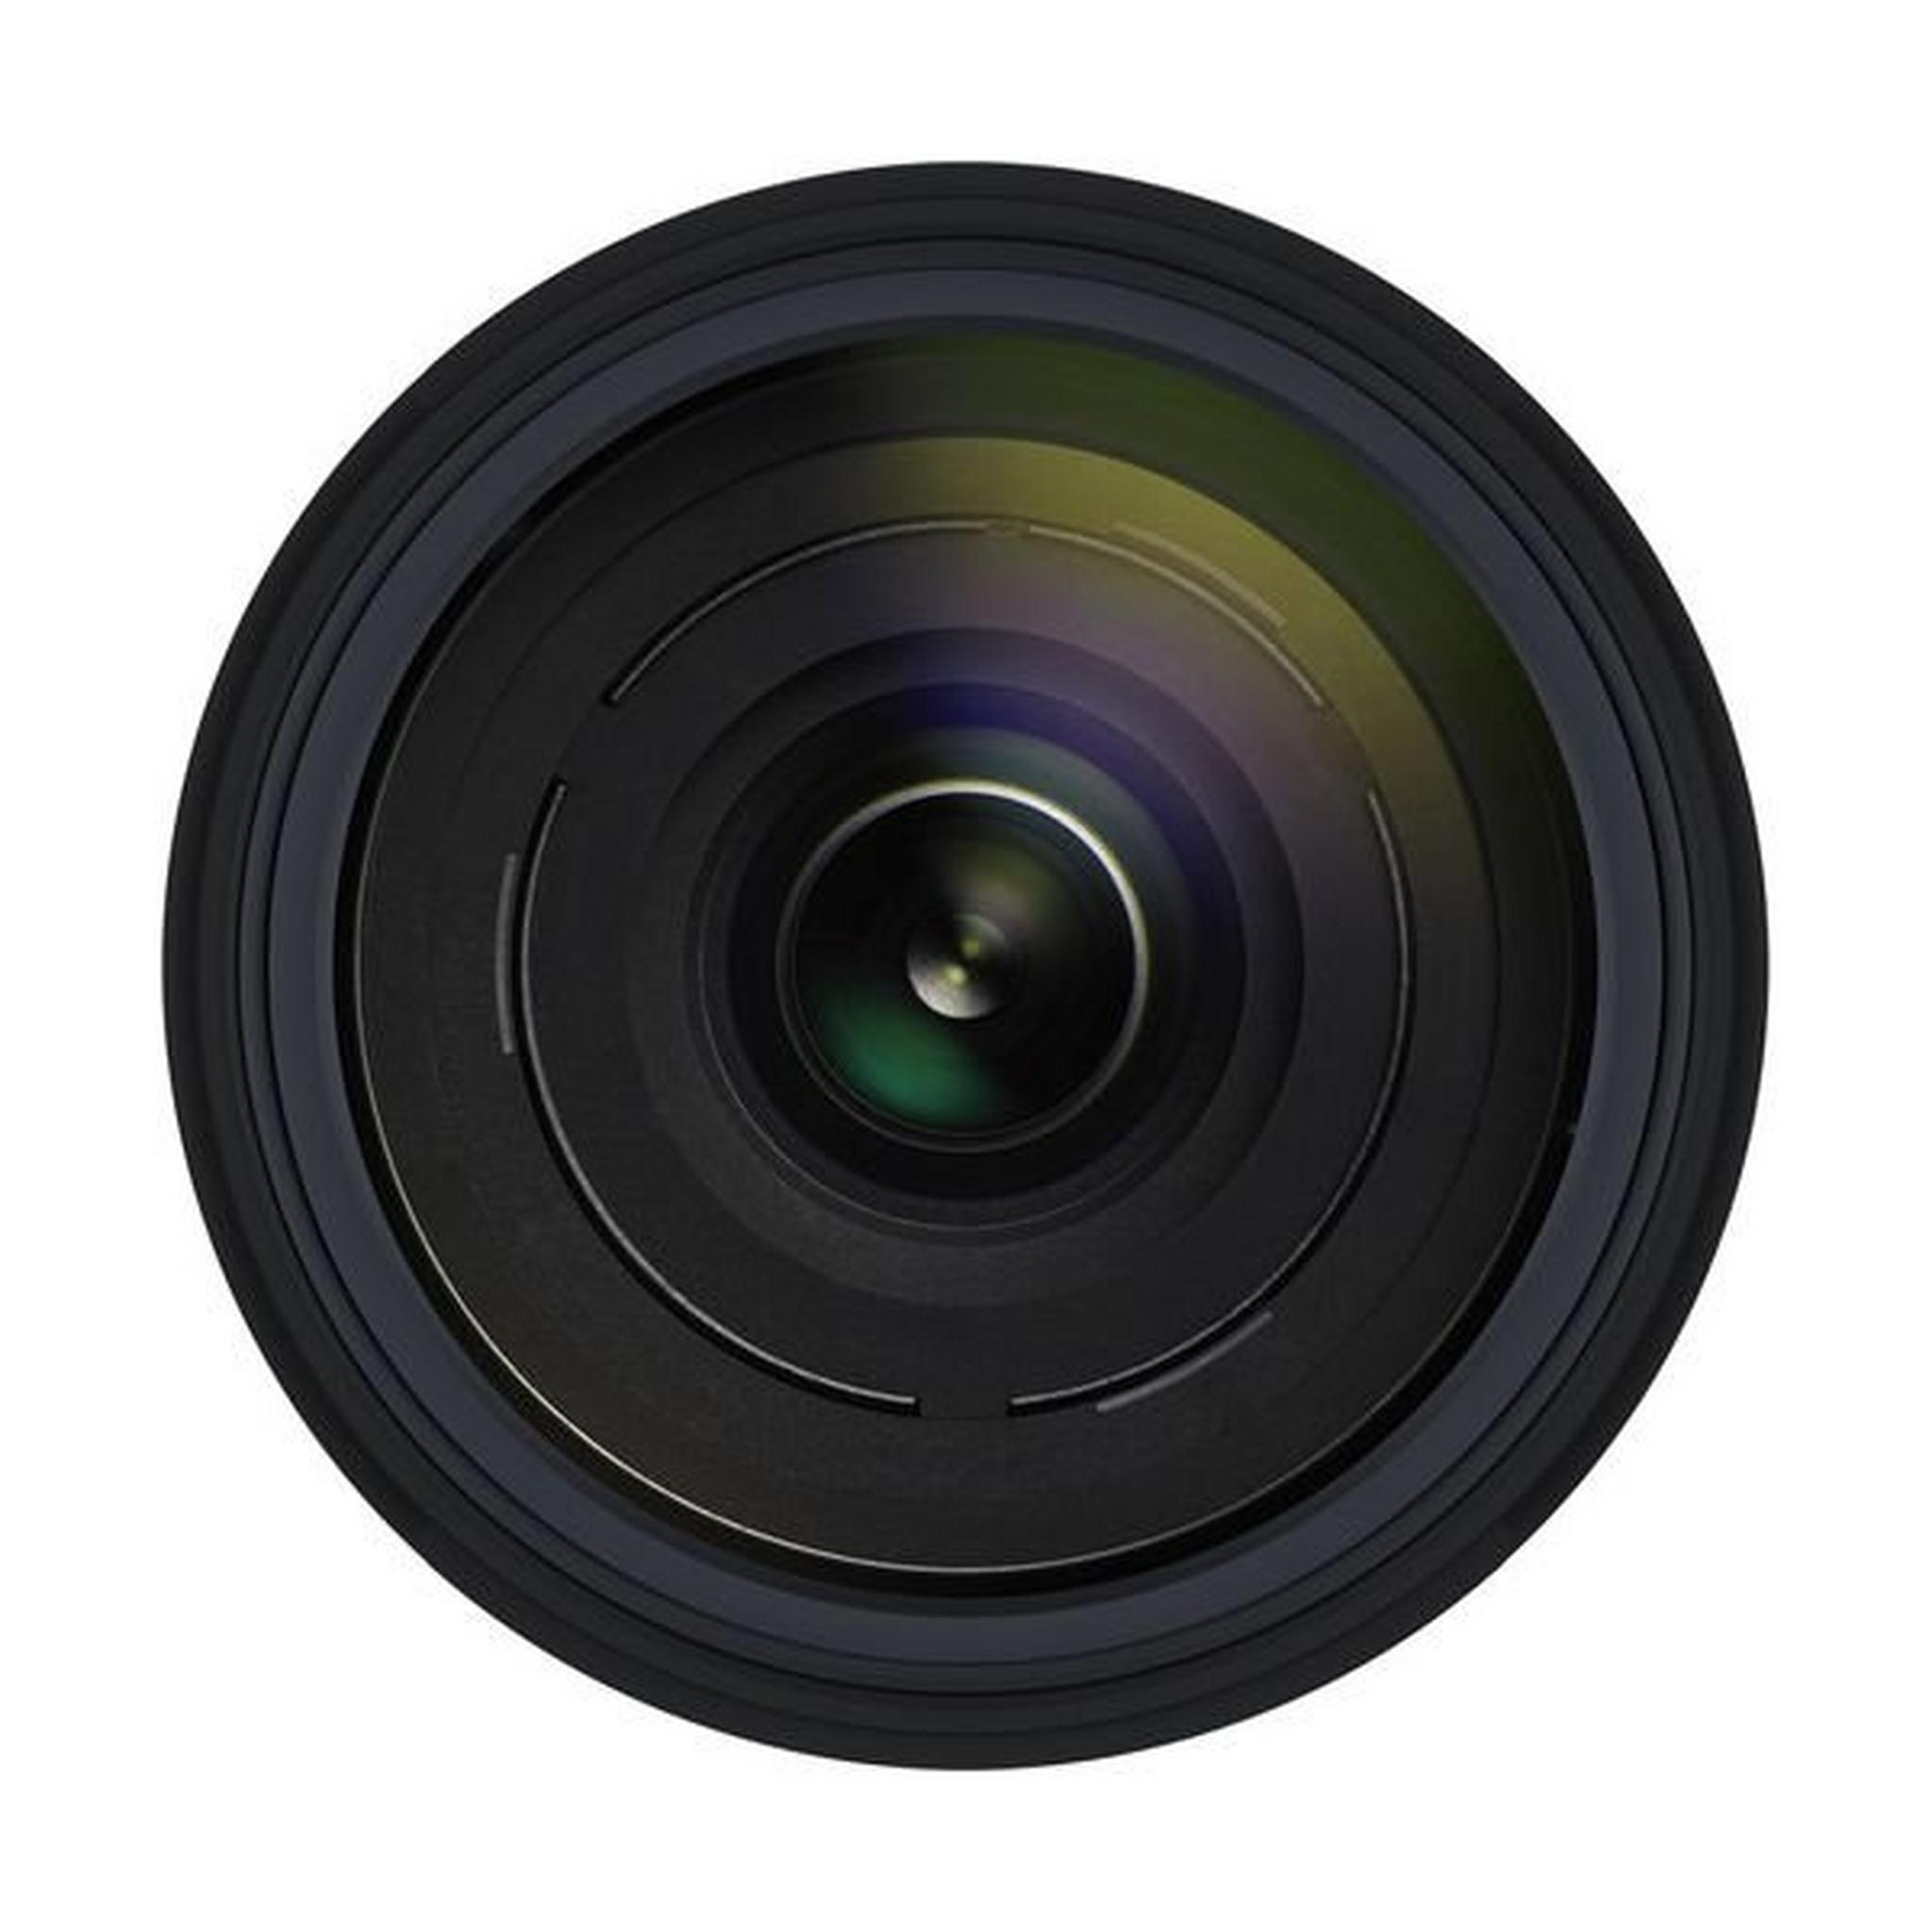 Tamron 18-400mm F/3.5-6.3 Di II VC HLD Lens for Nikon